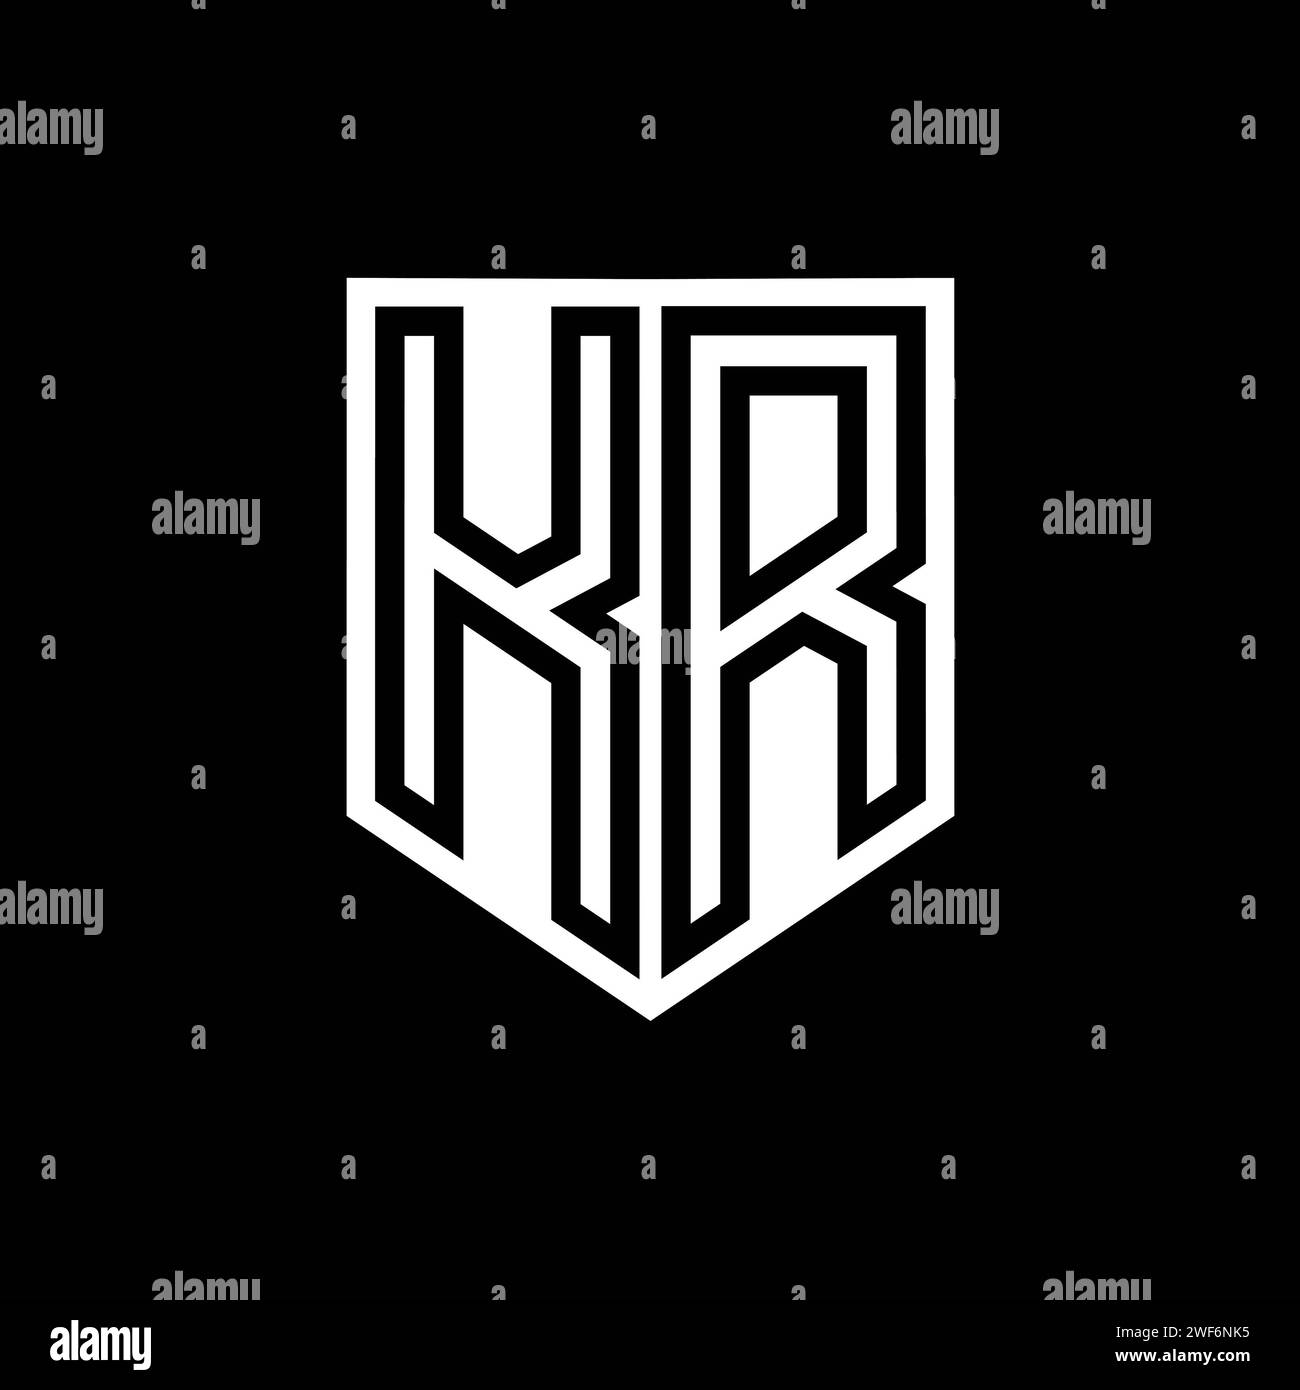 KR Letter Logo monogram shield geometric line inside shield style design template Stock Photo